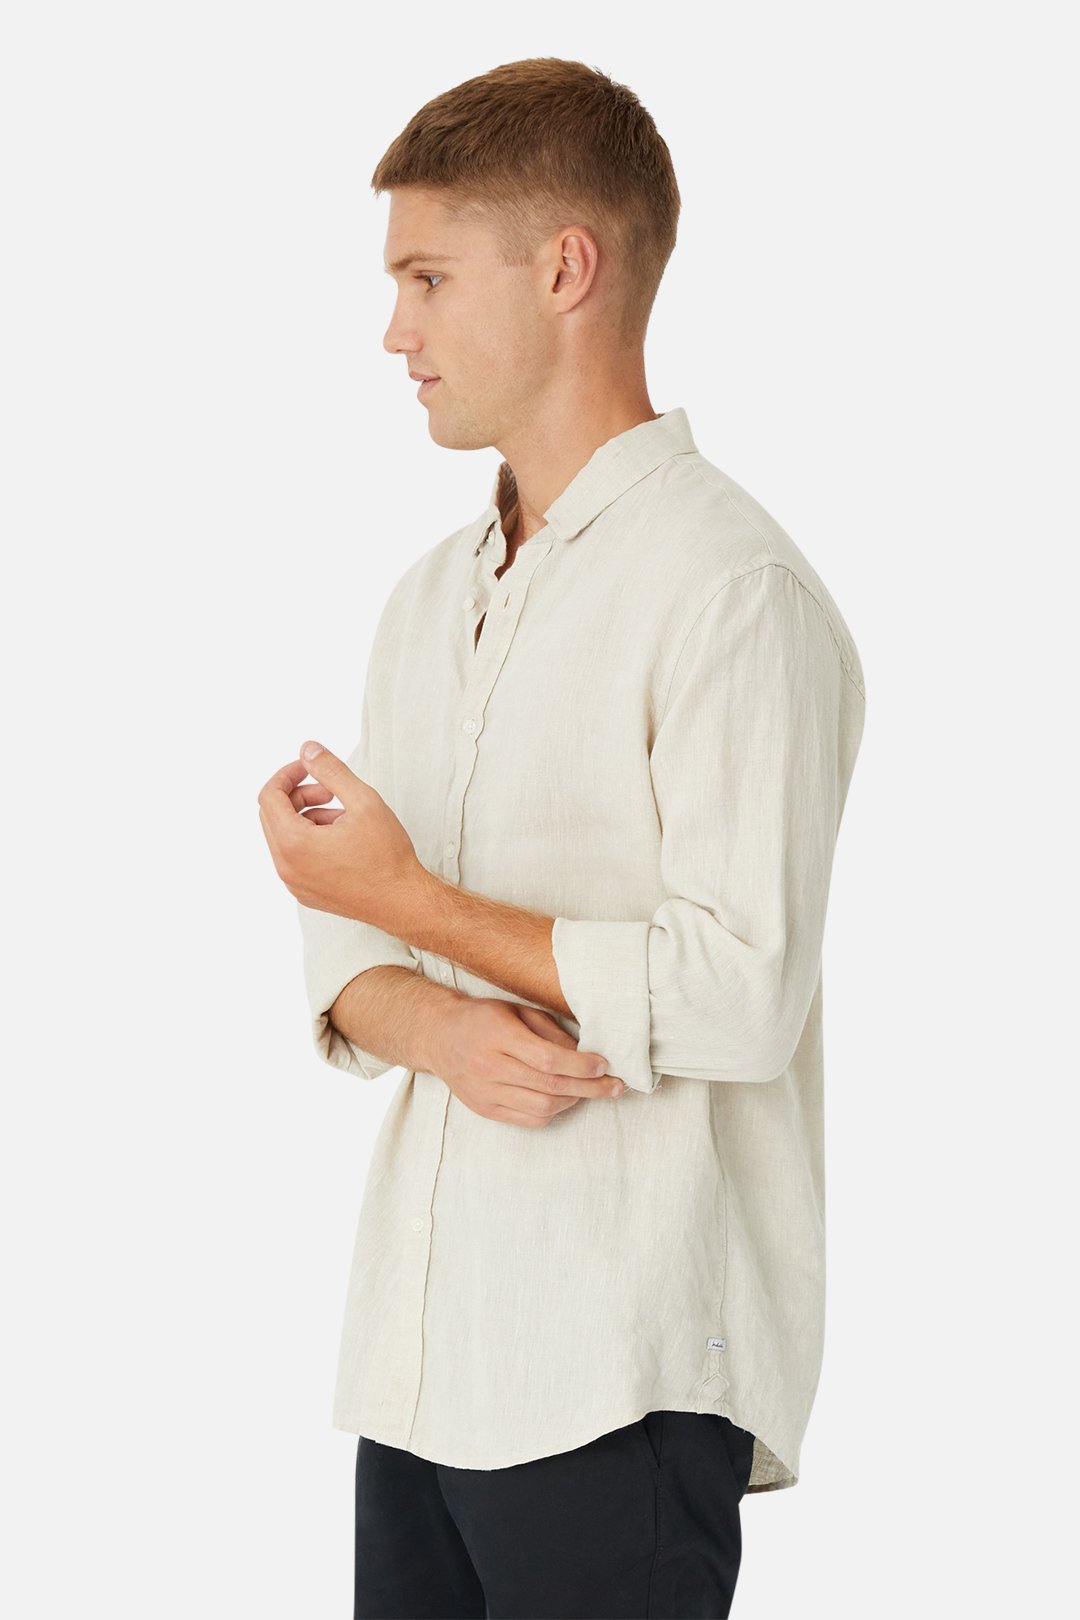 INDUSTRIE - The Tennyson Linen L/S Shirt - OATMEAL